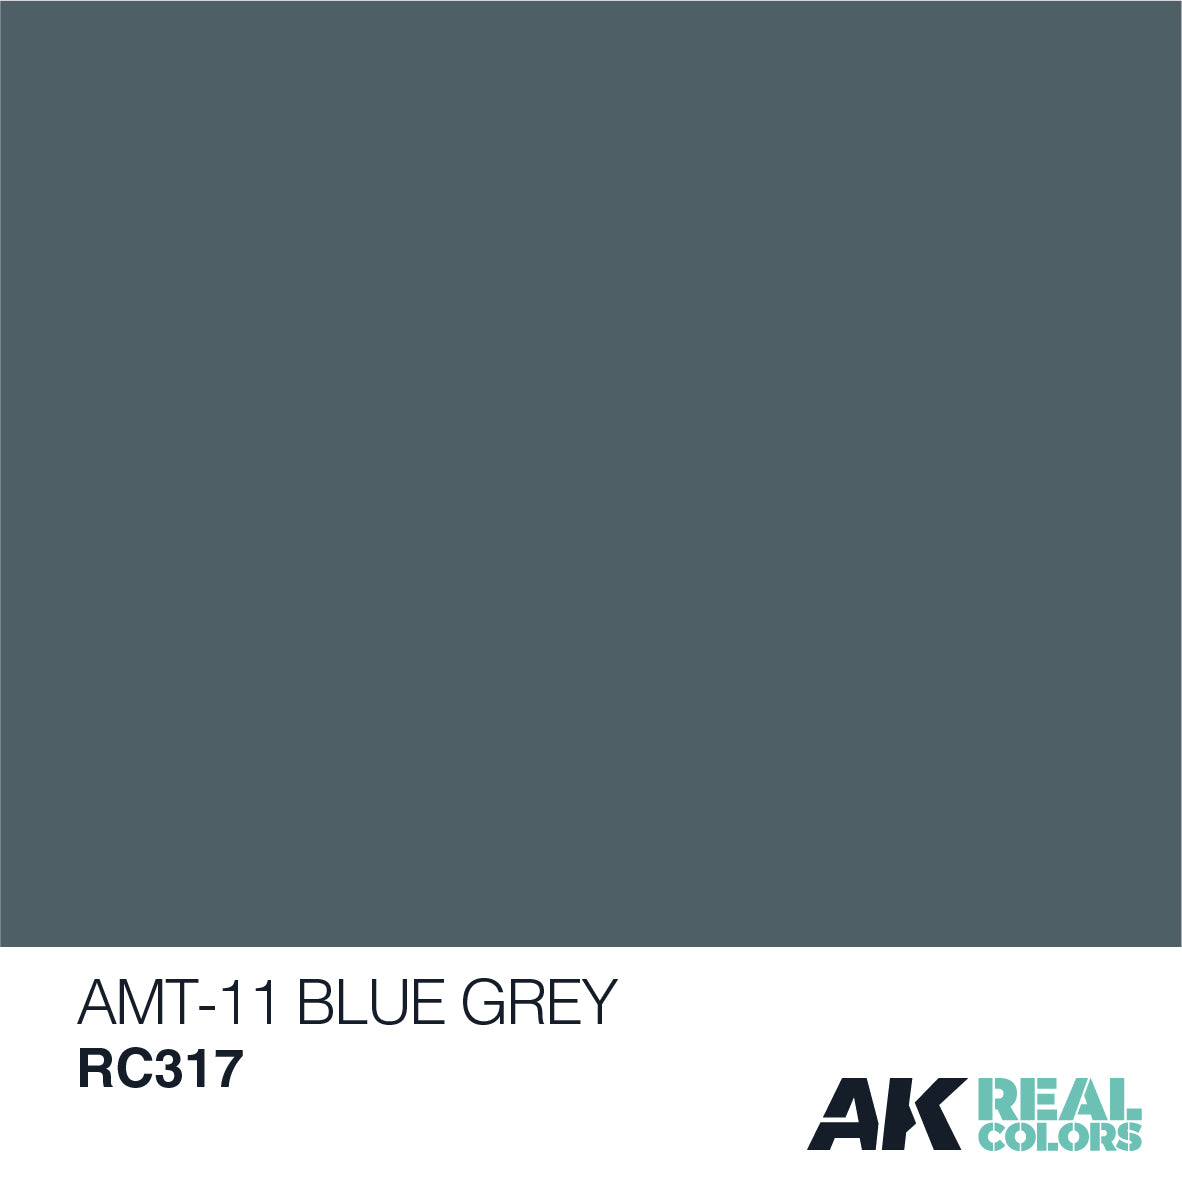 AMT-11 Blue Grey 10ml - Loaded Dice Barry Vale of Glamorgan CF64 3HD